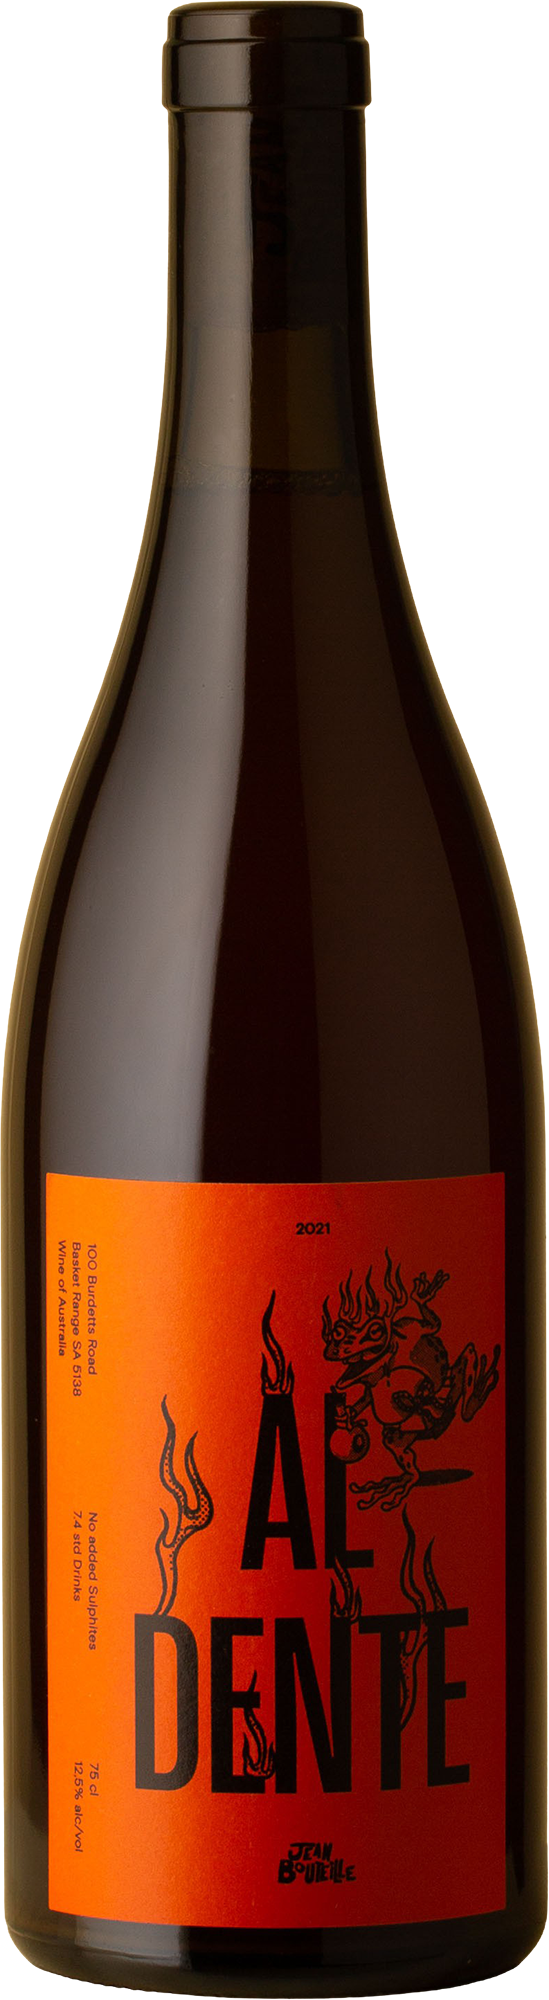 Jean Bouteille - Al Dente Chardonnay 2021 Orange Wine